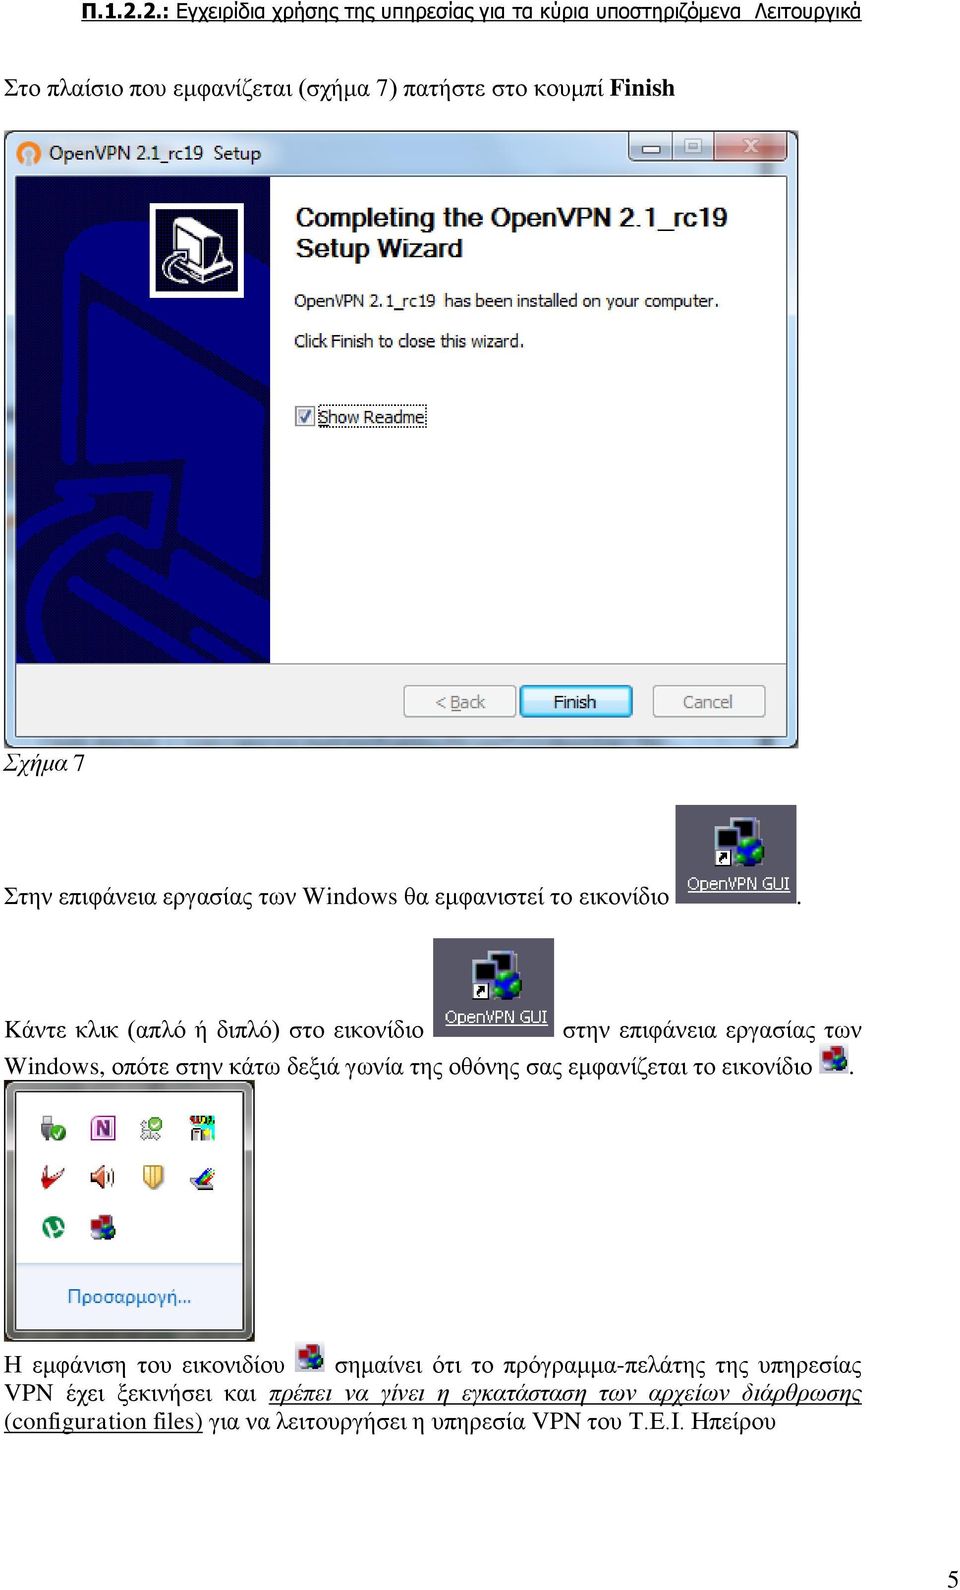 Kάντε κλικ (απλό ή διπλό) στο εικονίδιο στην επιφάνεια εργασίας των Windows, οπότε στην κάτω δεξιά γωνία της οθόνης σας